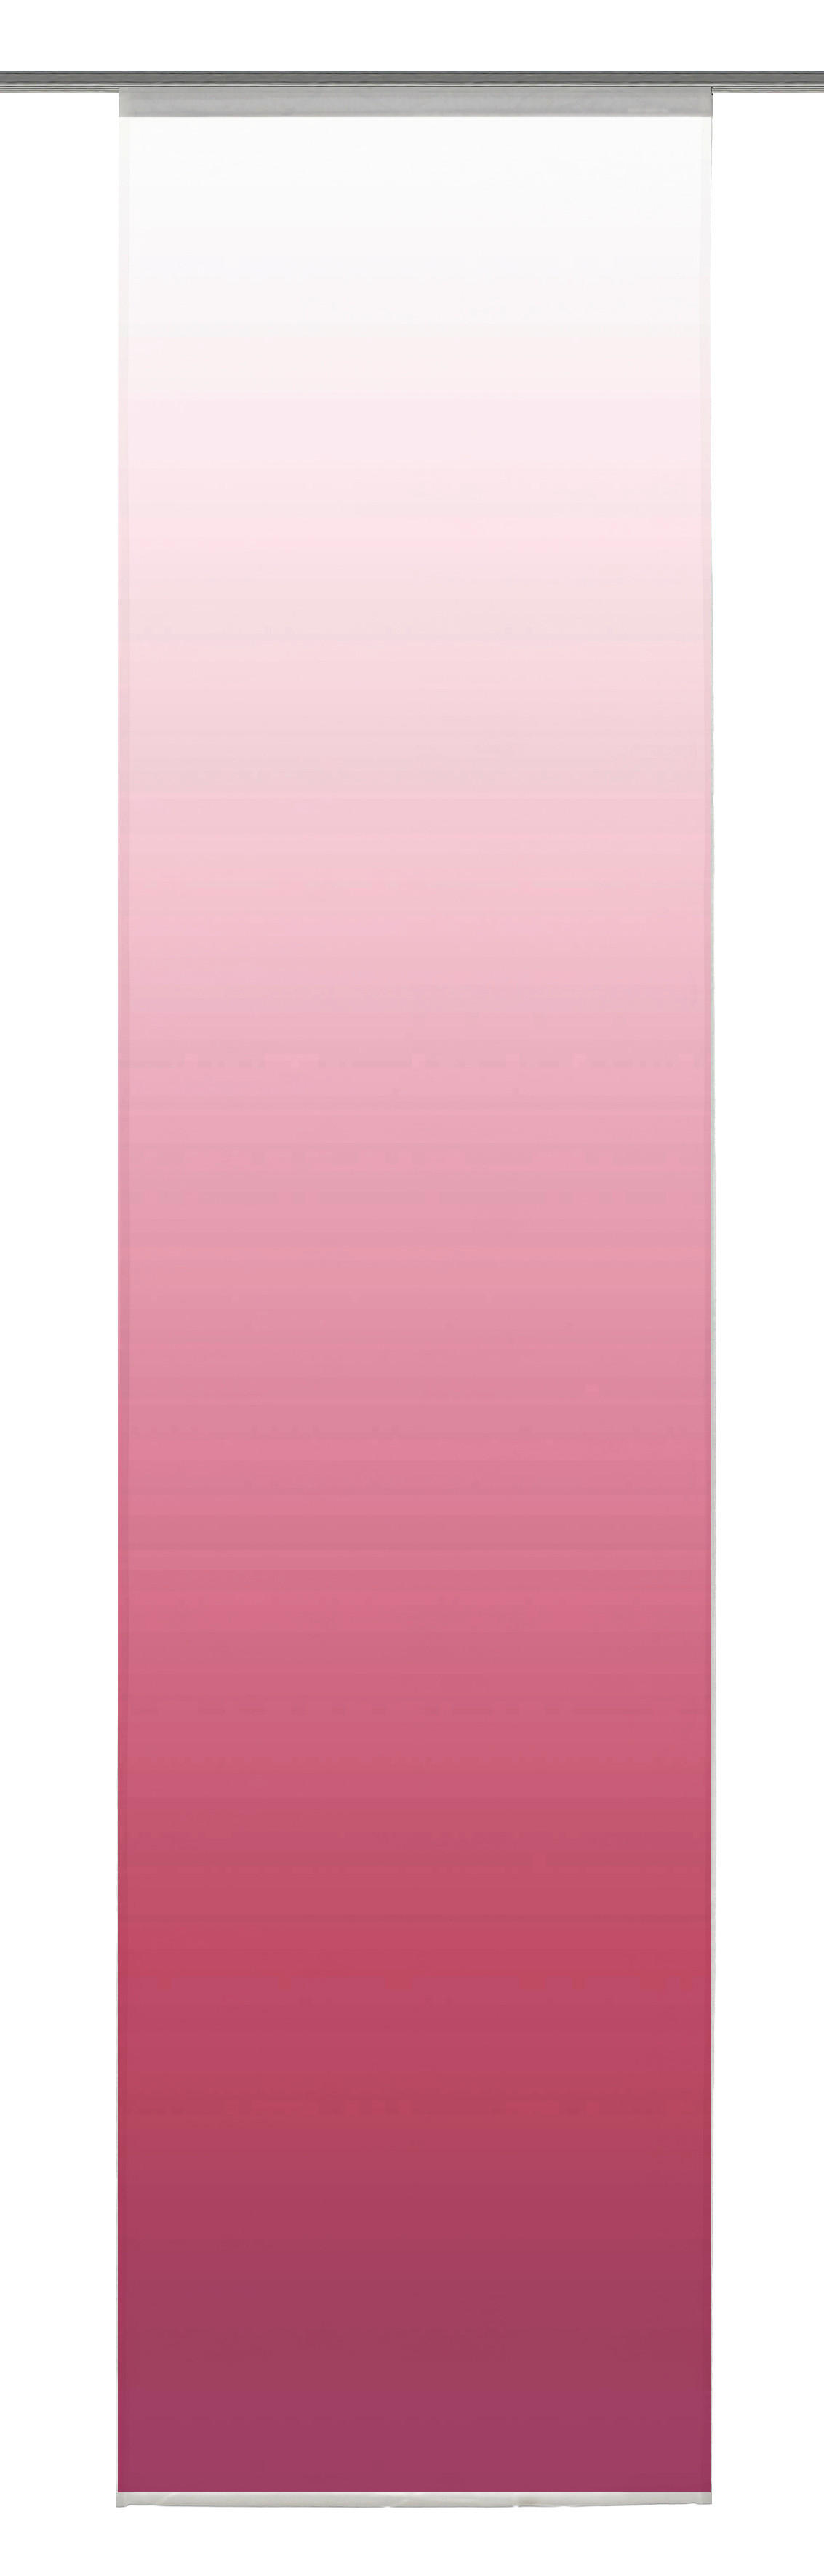 FLÄCHENVORHANG   blickdicht   60/245 cm  - Pink, Design, Textil (60/245cm)